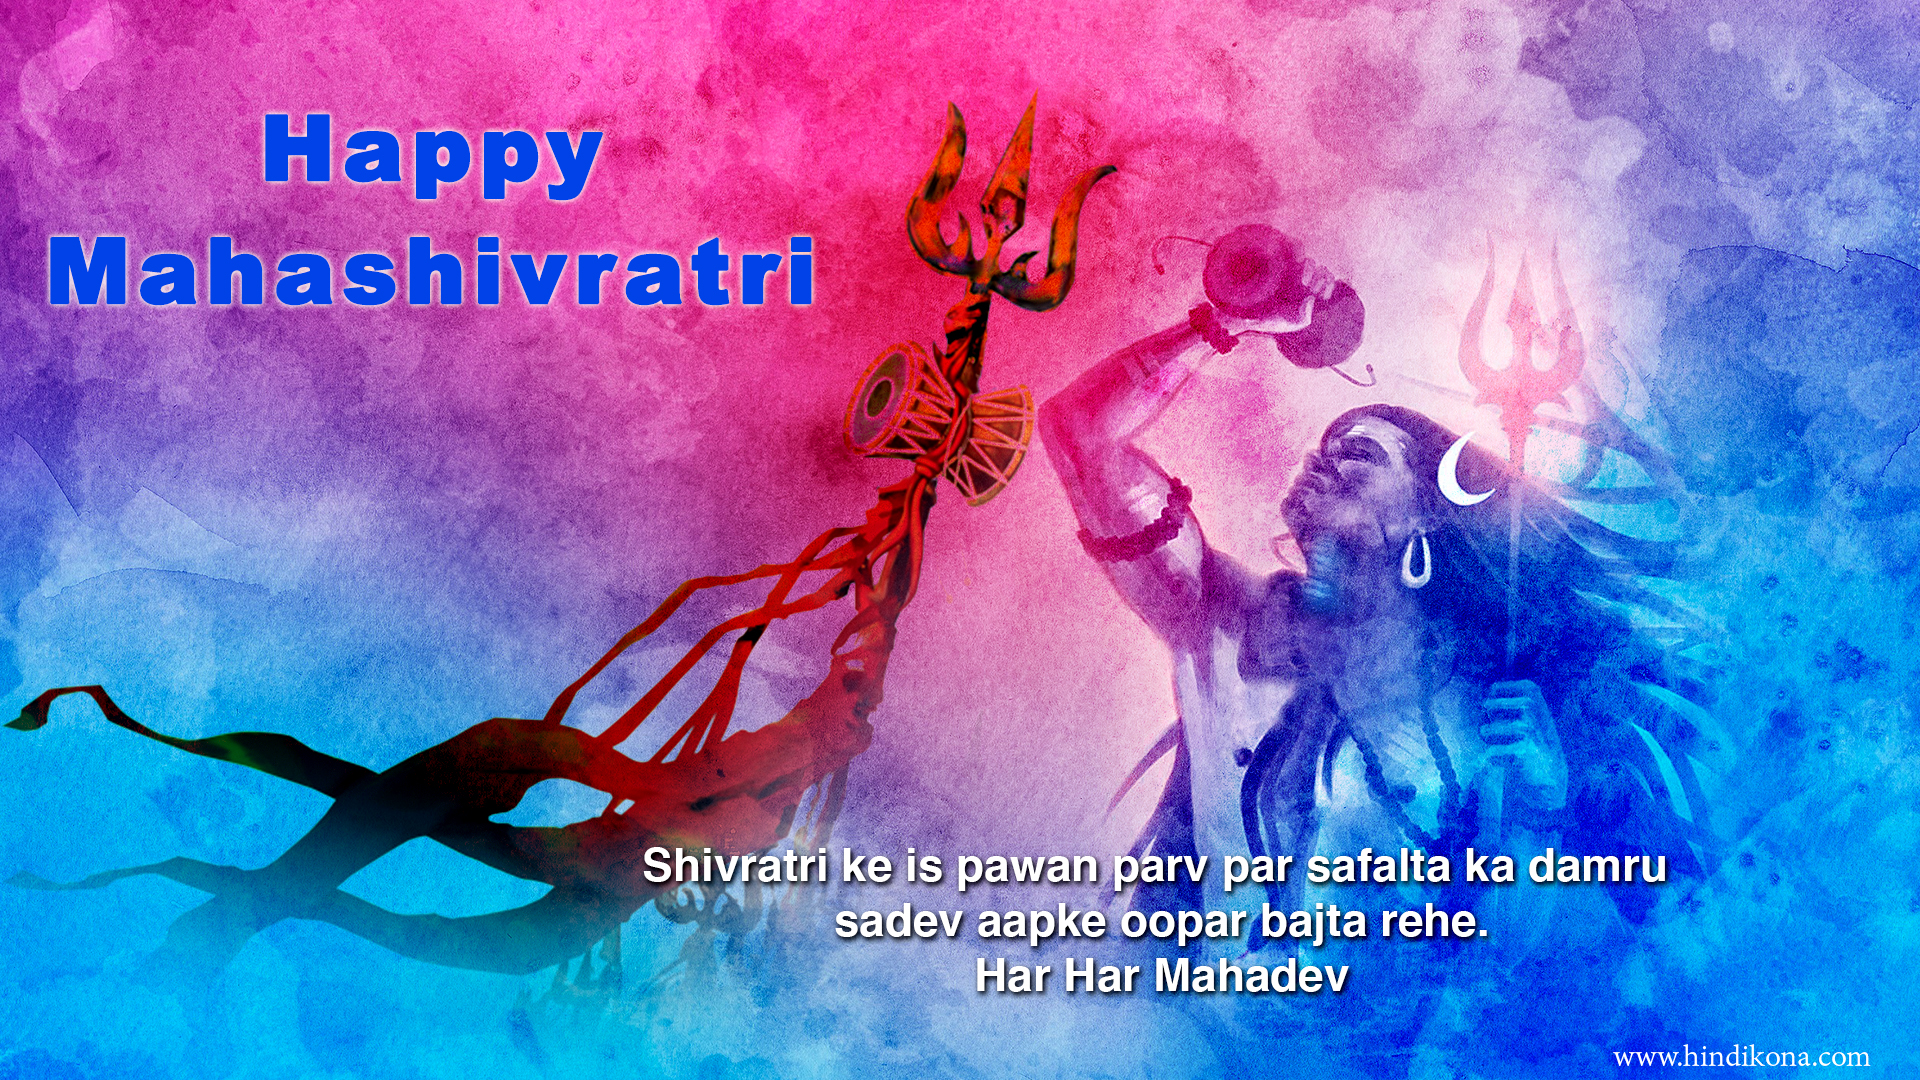 Maha Shivaratri Images With Quotes - Maha Shivaratri Animated Images Hd -  1920x1080 Wallpaper 